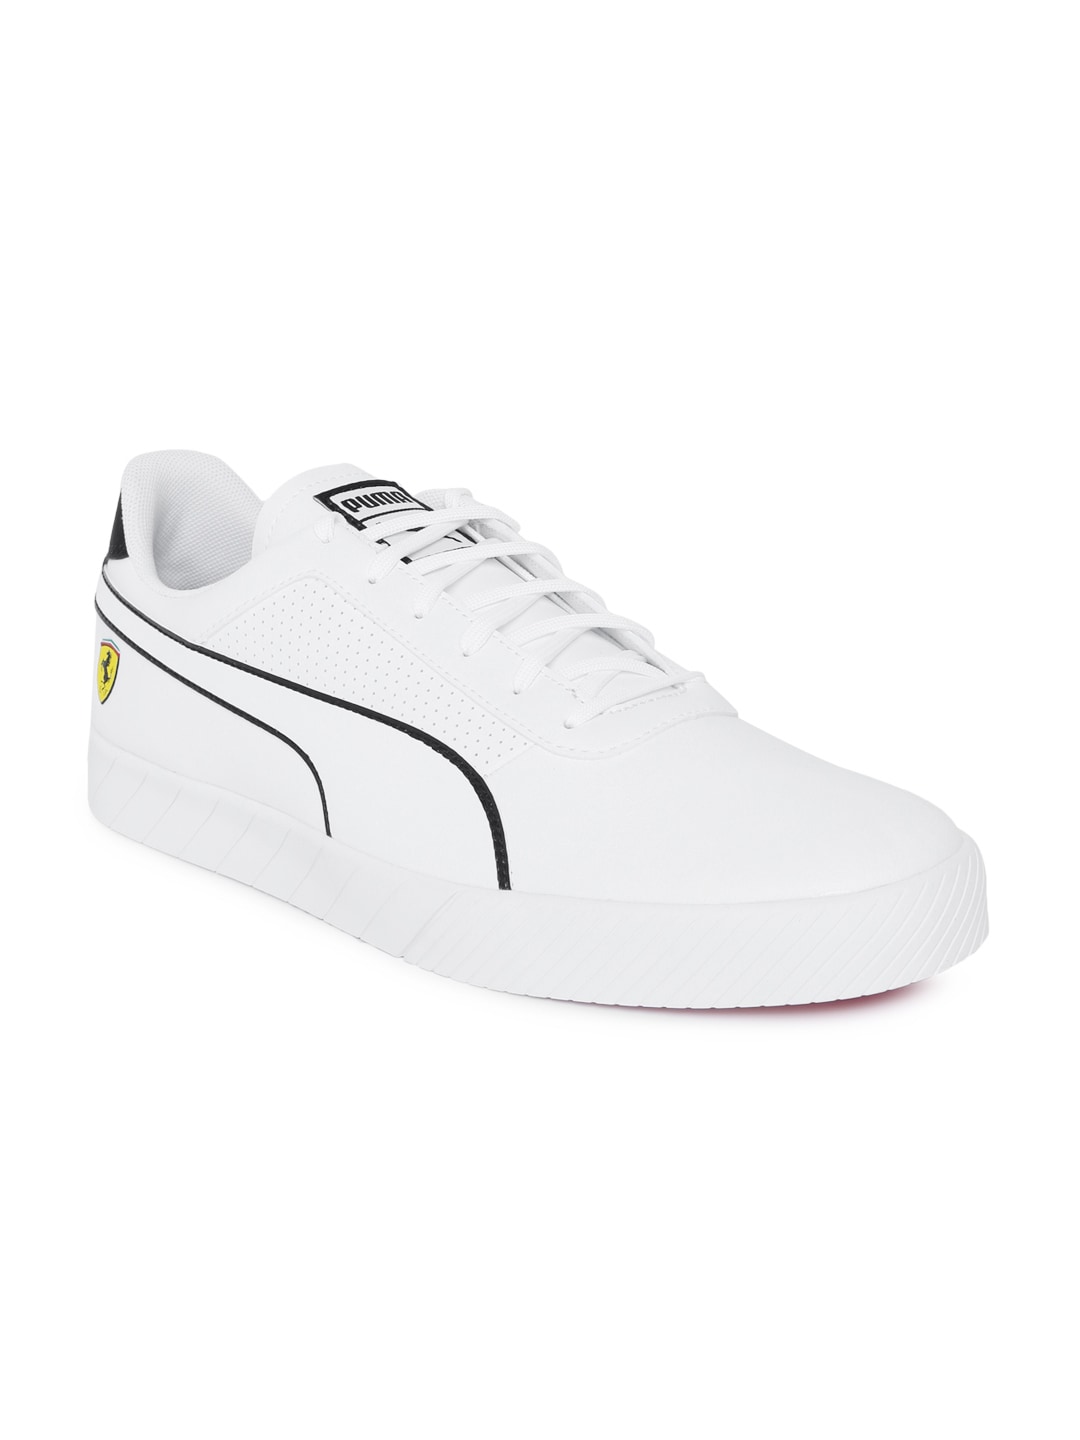 Puma Men White SF Vulc Track Sneakers 